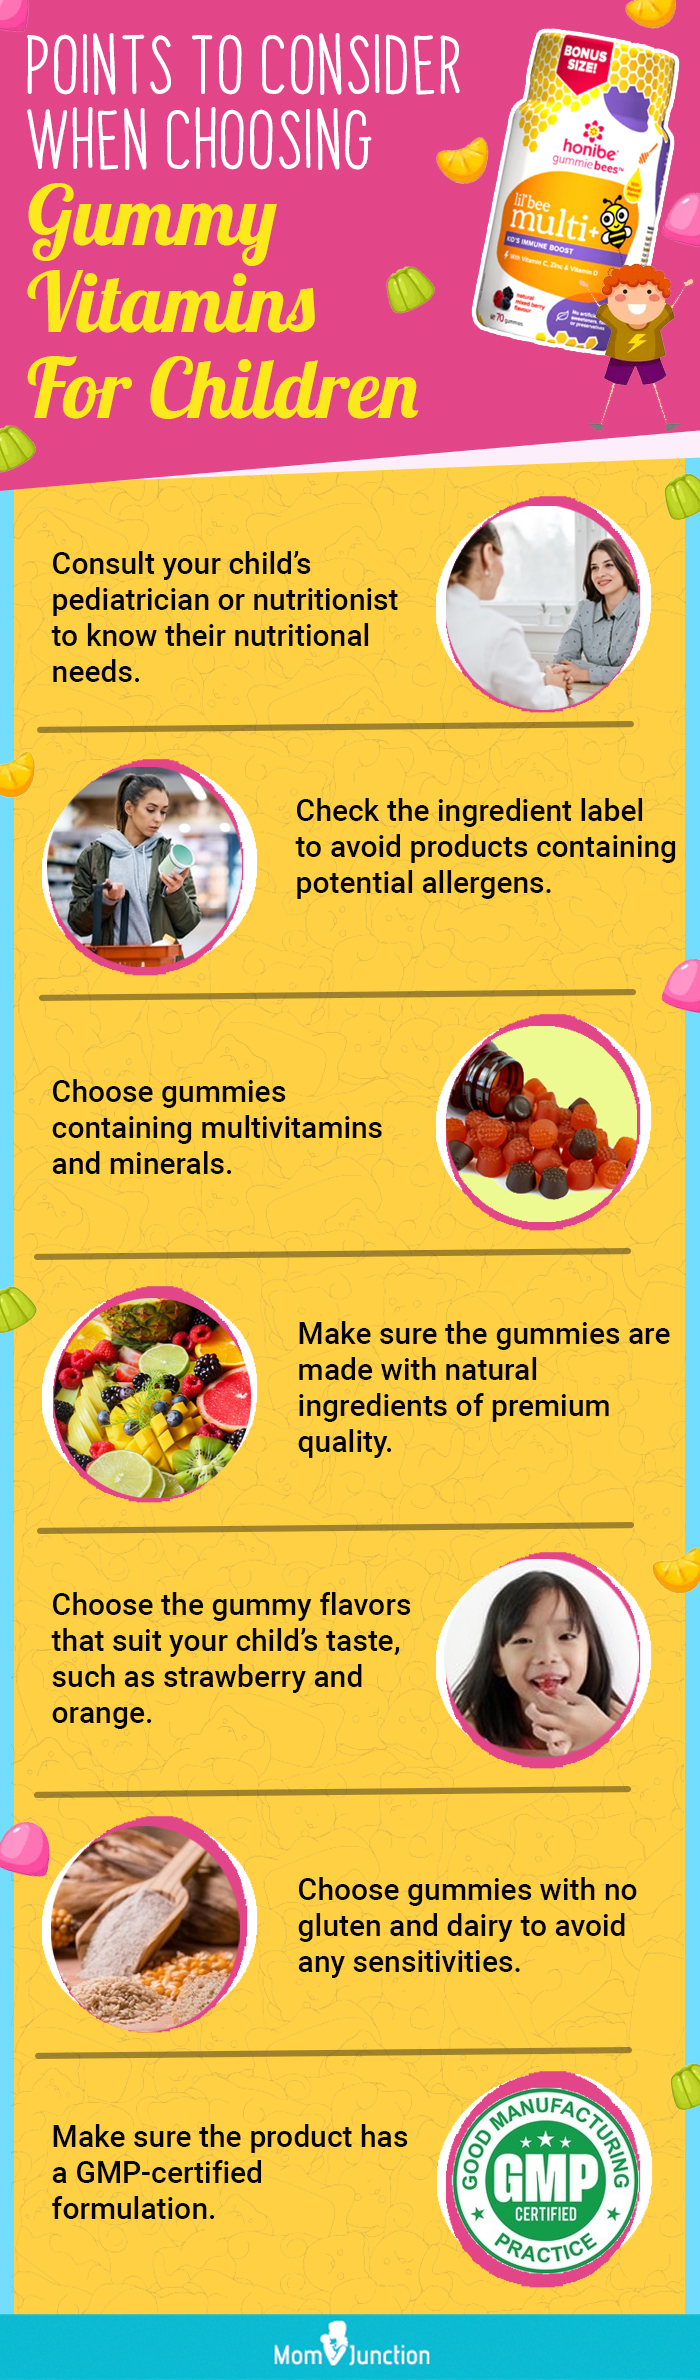 Points To Consider When Choosing Gummy Vitamins For Children (infographic)